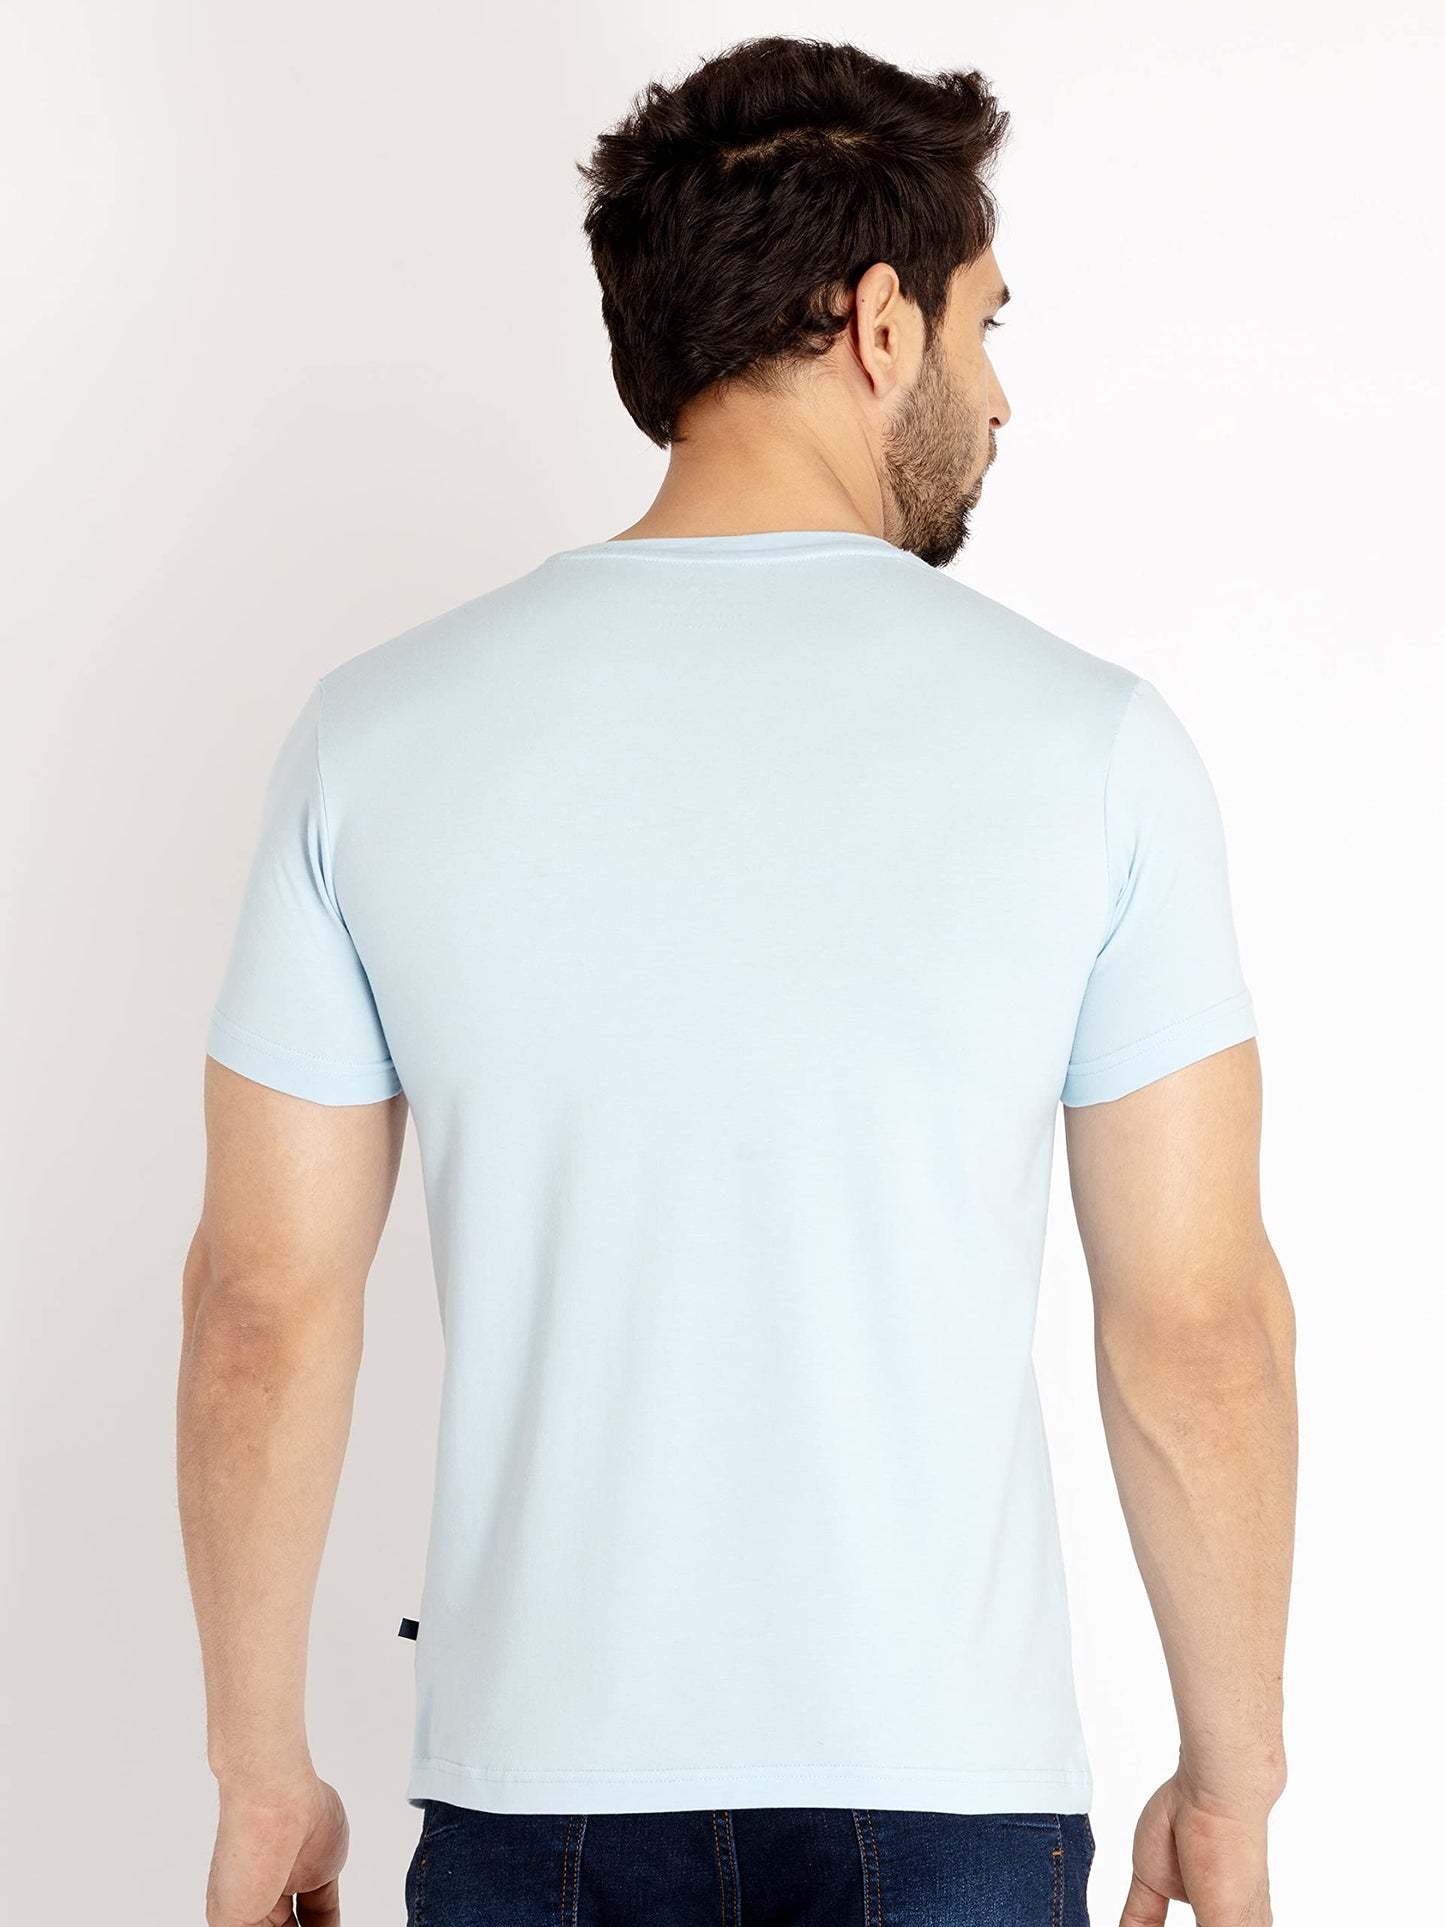 Status Quo Men's Cotton Printed Round Neck T-Shirt | Sky | L | SQ-RN-23087-SKY-L |